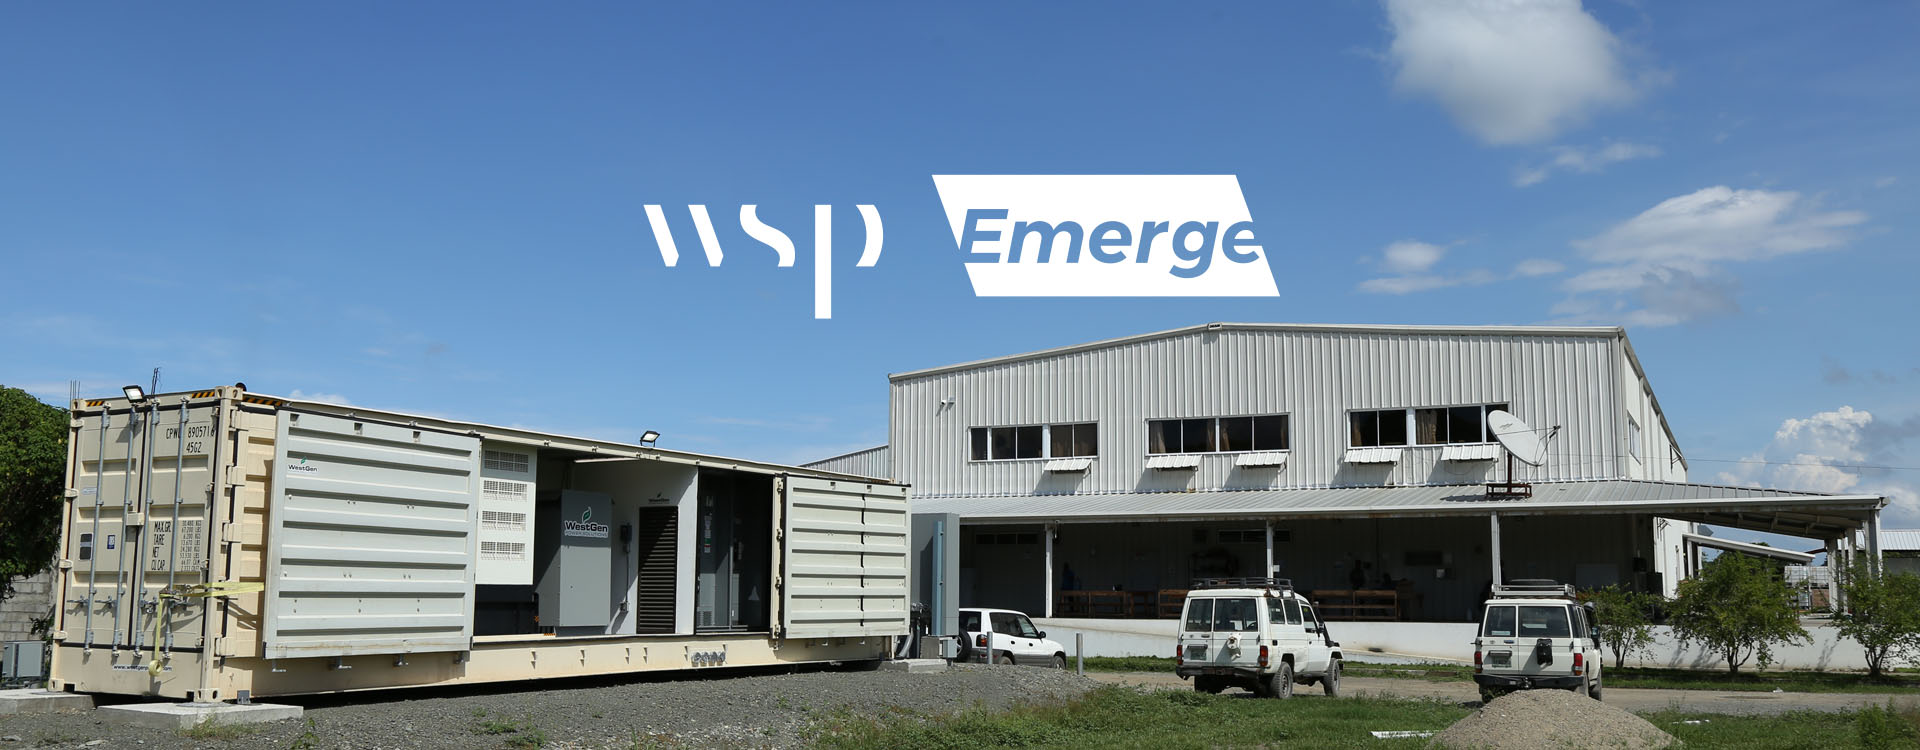 bnr-wsp-emerge-solar-partnership